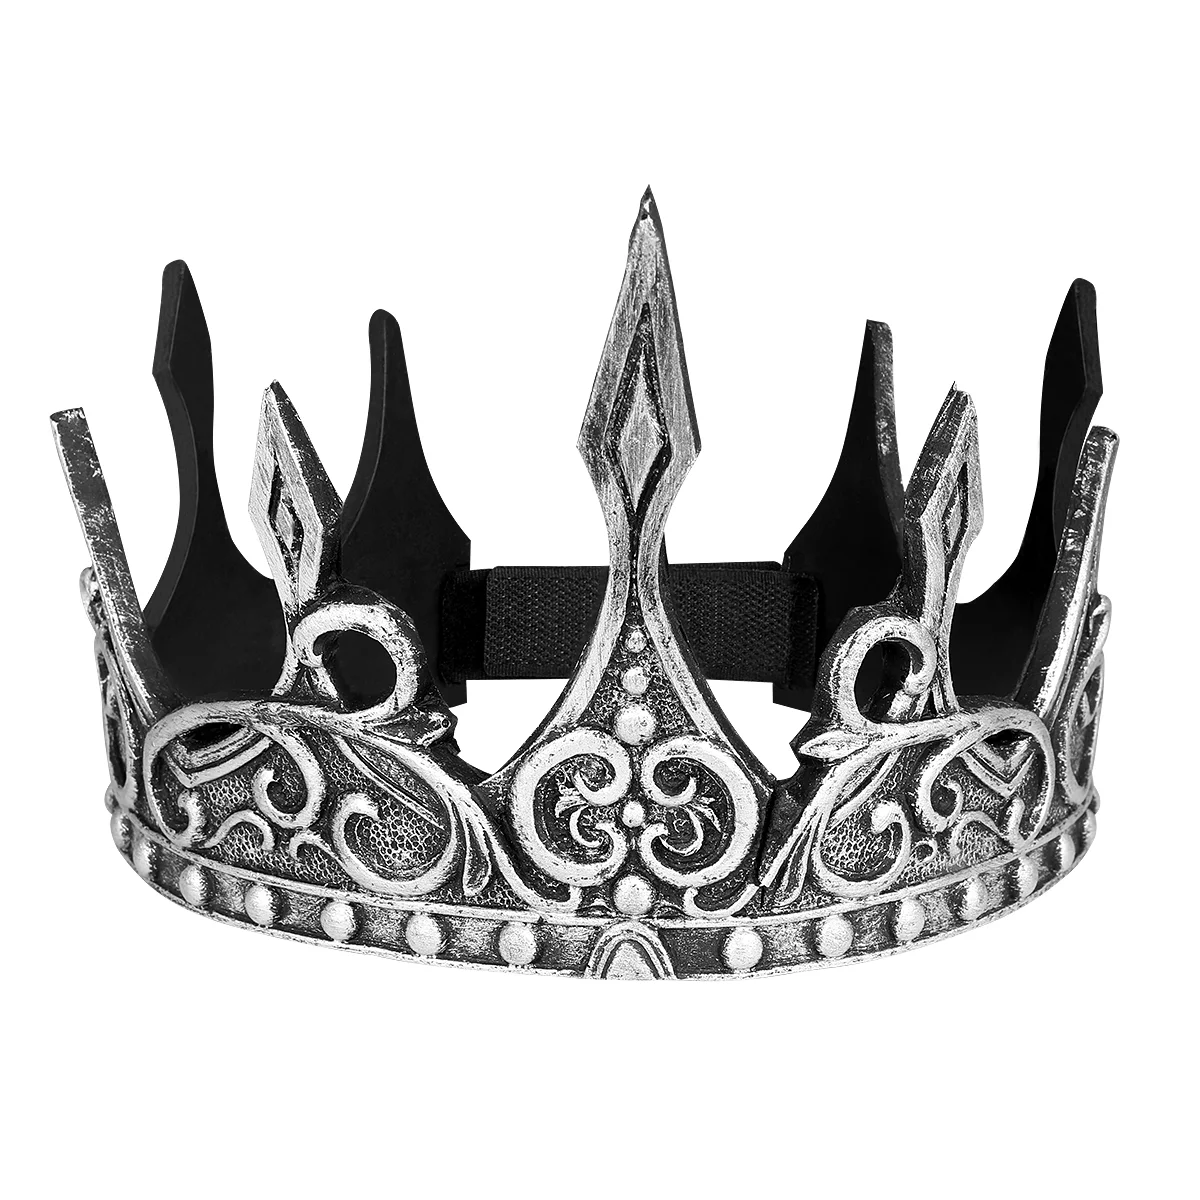 

Amosfun Silver King Medieva Crown Headband PU Crown Crown Headdress Party Favors for Men Adults